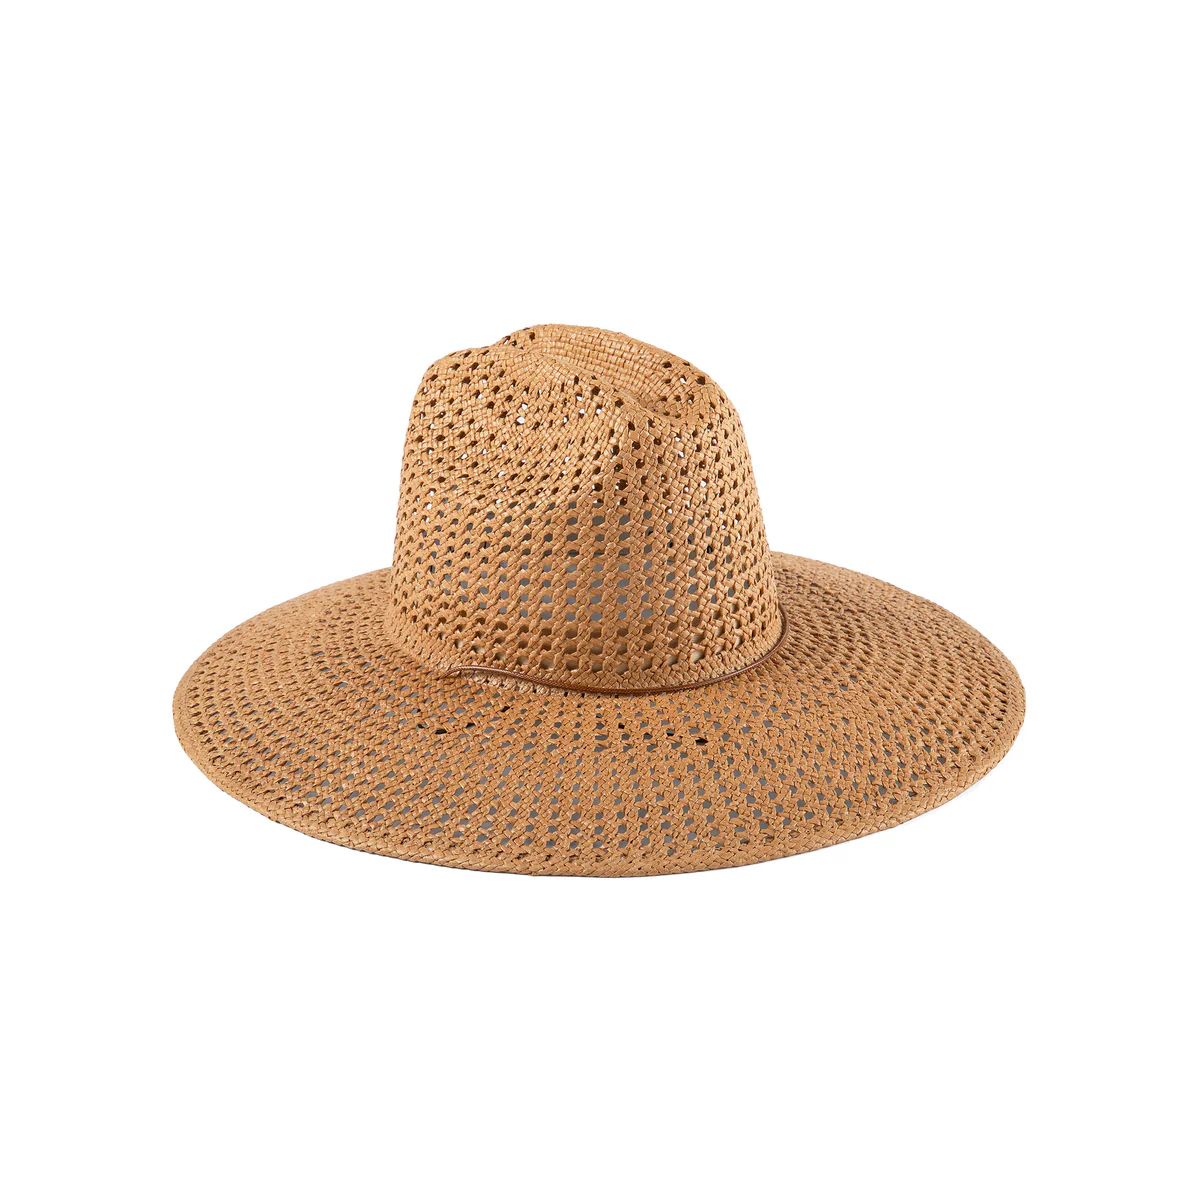 The Vista - Straw Cowboy Hat in Brown | Lack of Color US | Lack of Color